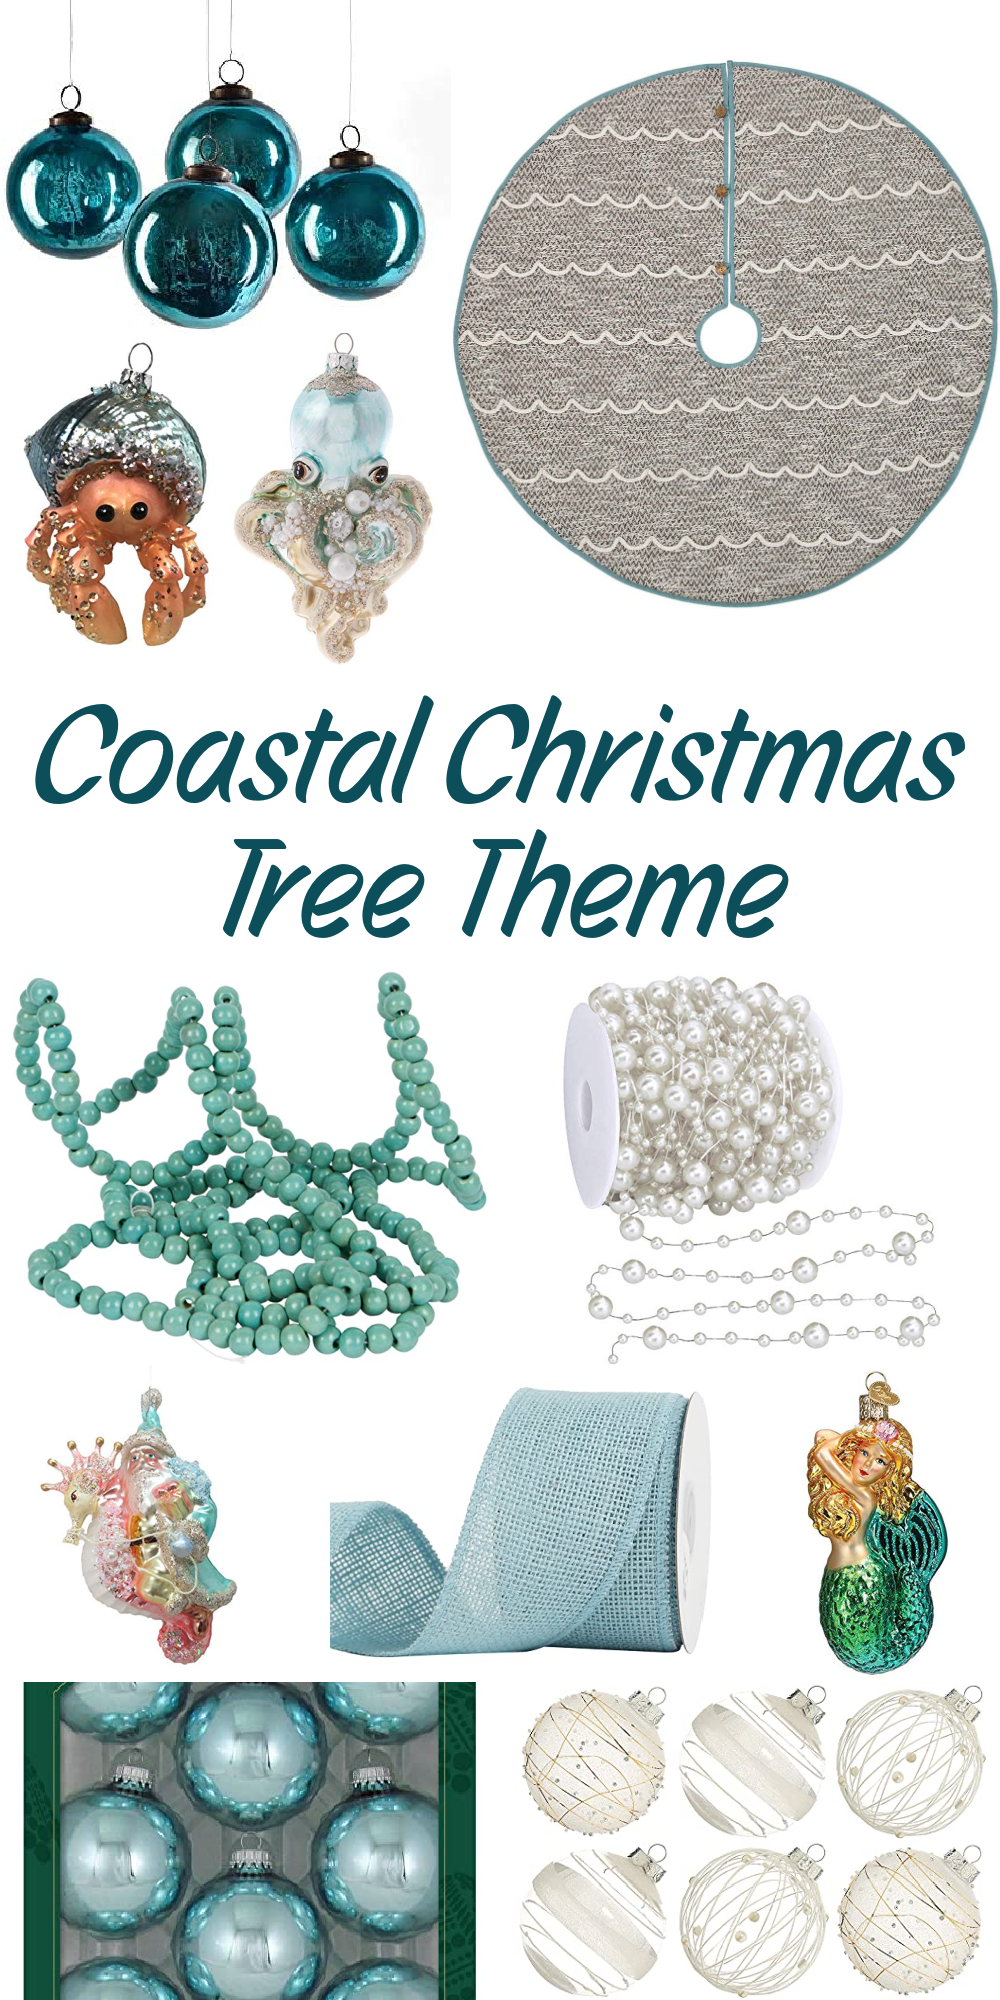 Coastal Christmas Tree Theme